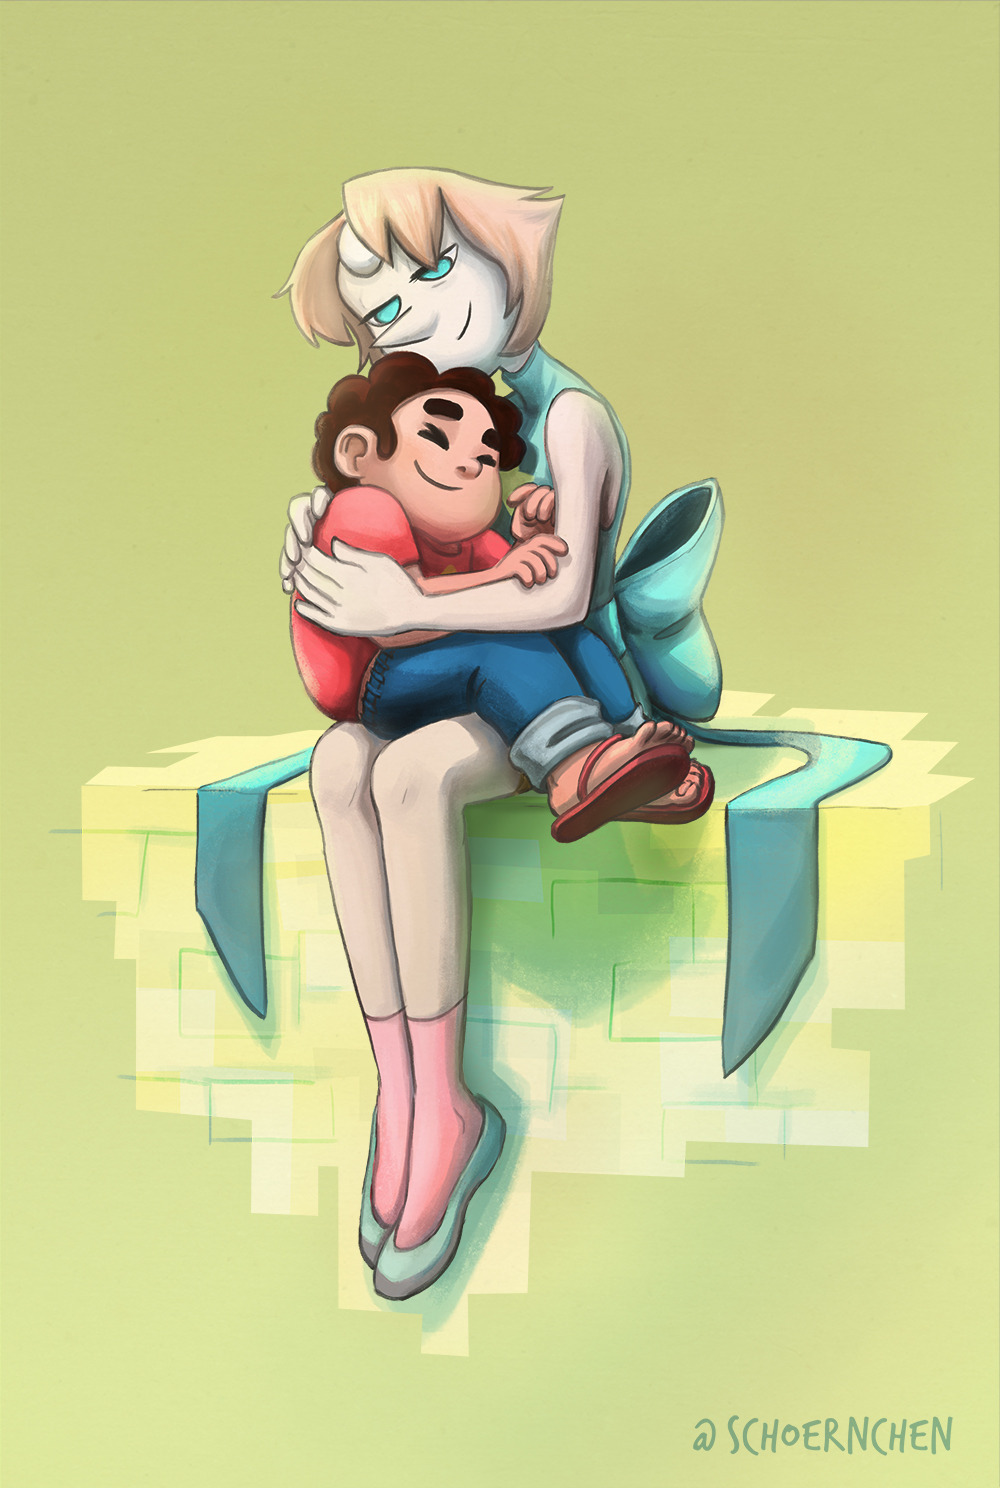 A little bit Steven and Pearl cuddling :3